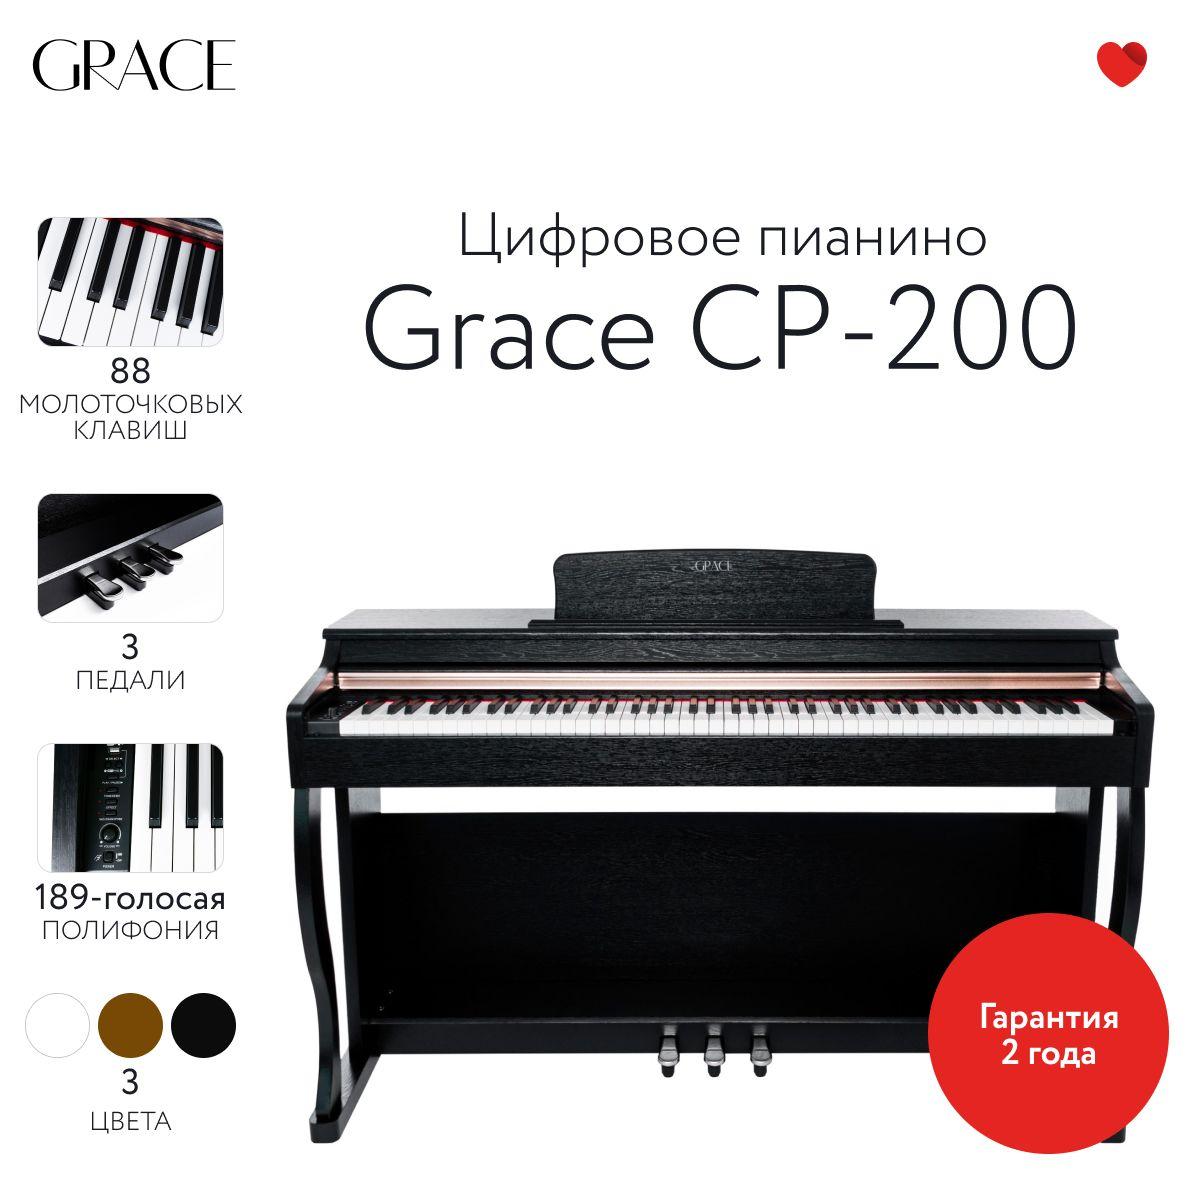 Grace CP-200 BK - Цифровое пианино в корпусе с тремя педалями